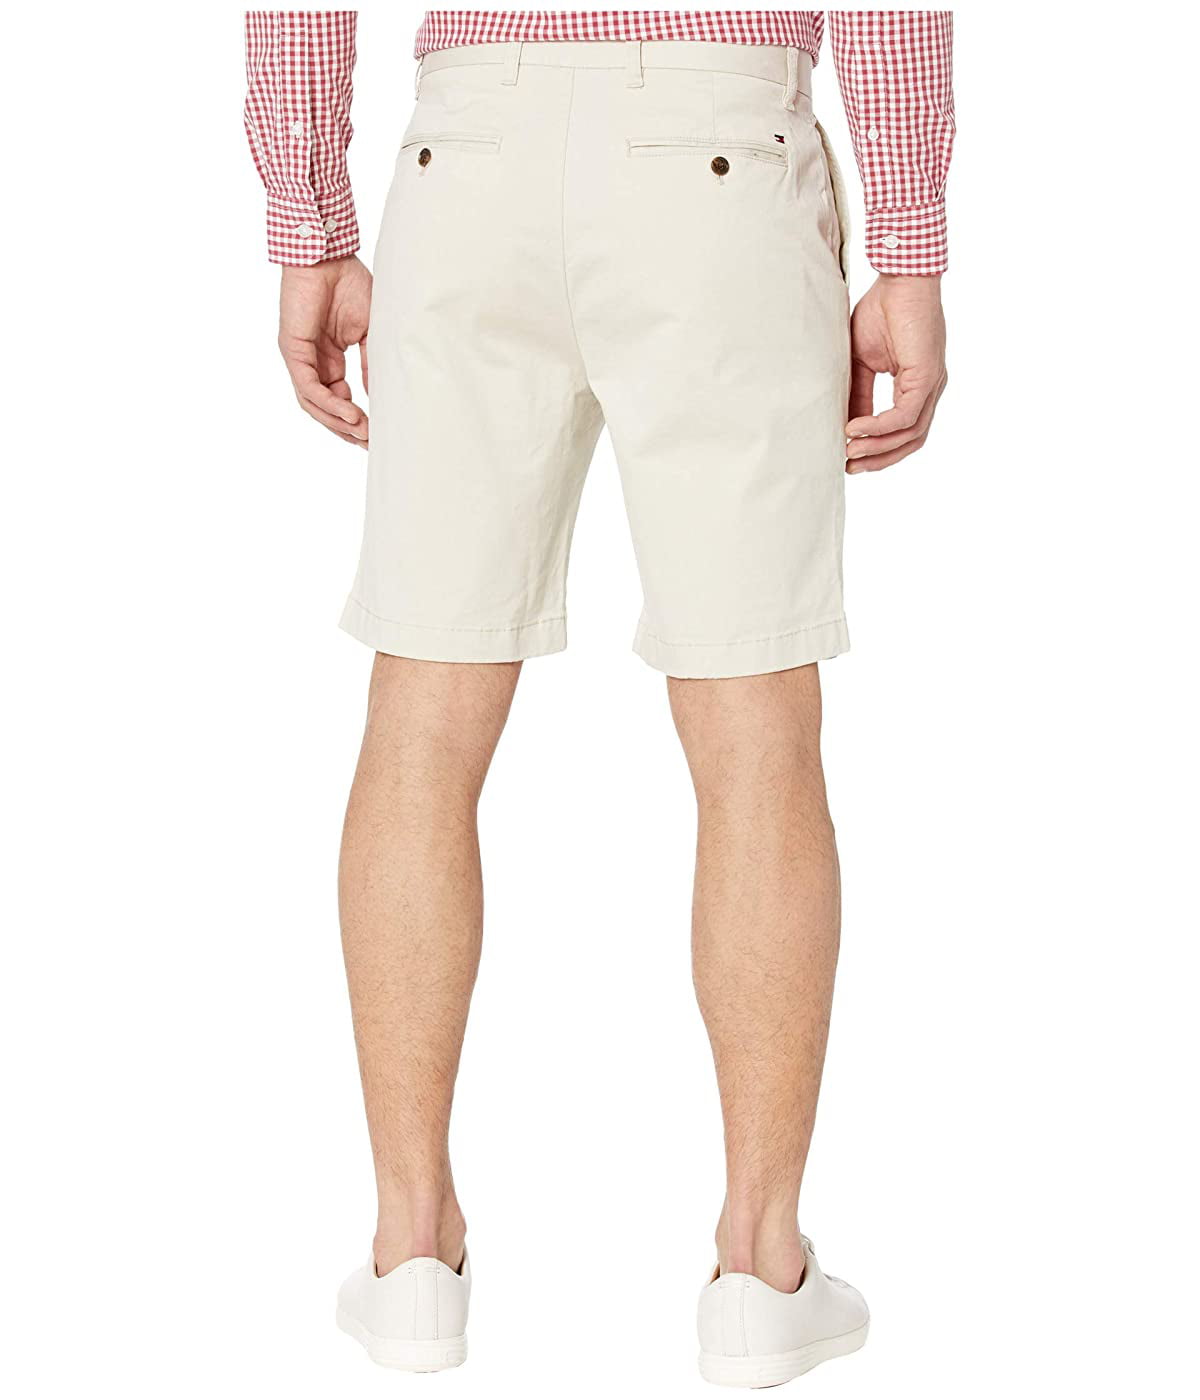 Tommy Hilfiger Men's Classic Fit Flat Front 100% Cotton Shorts Assorted Colors 